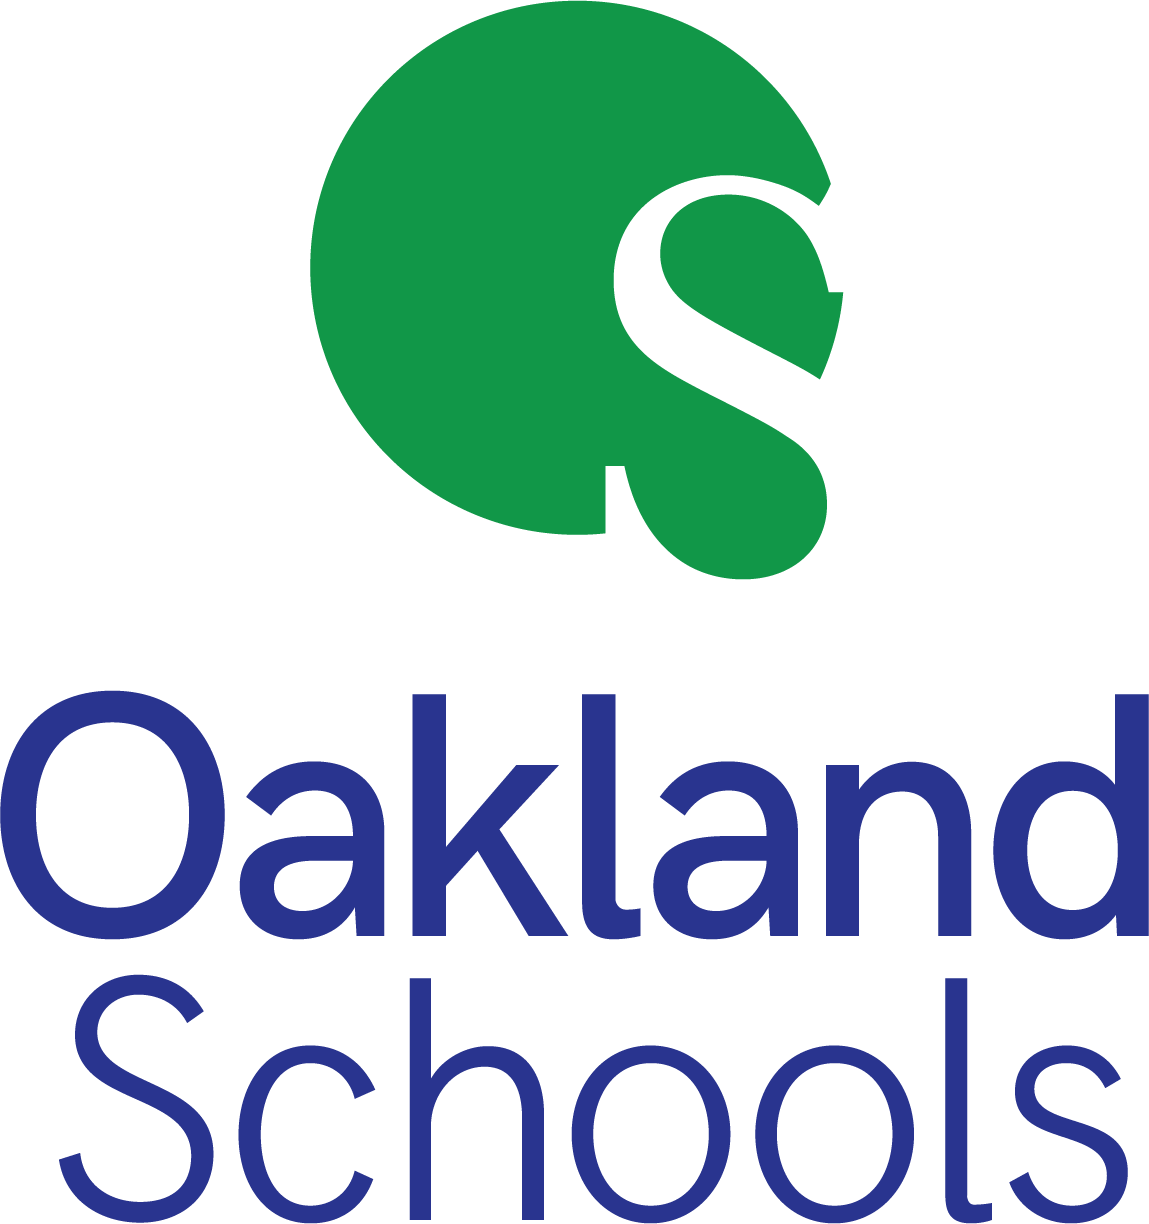 Oakland Schools